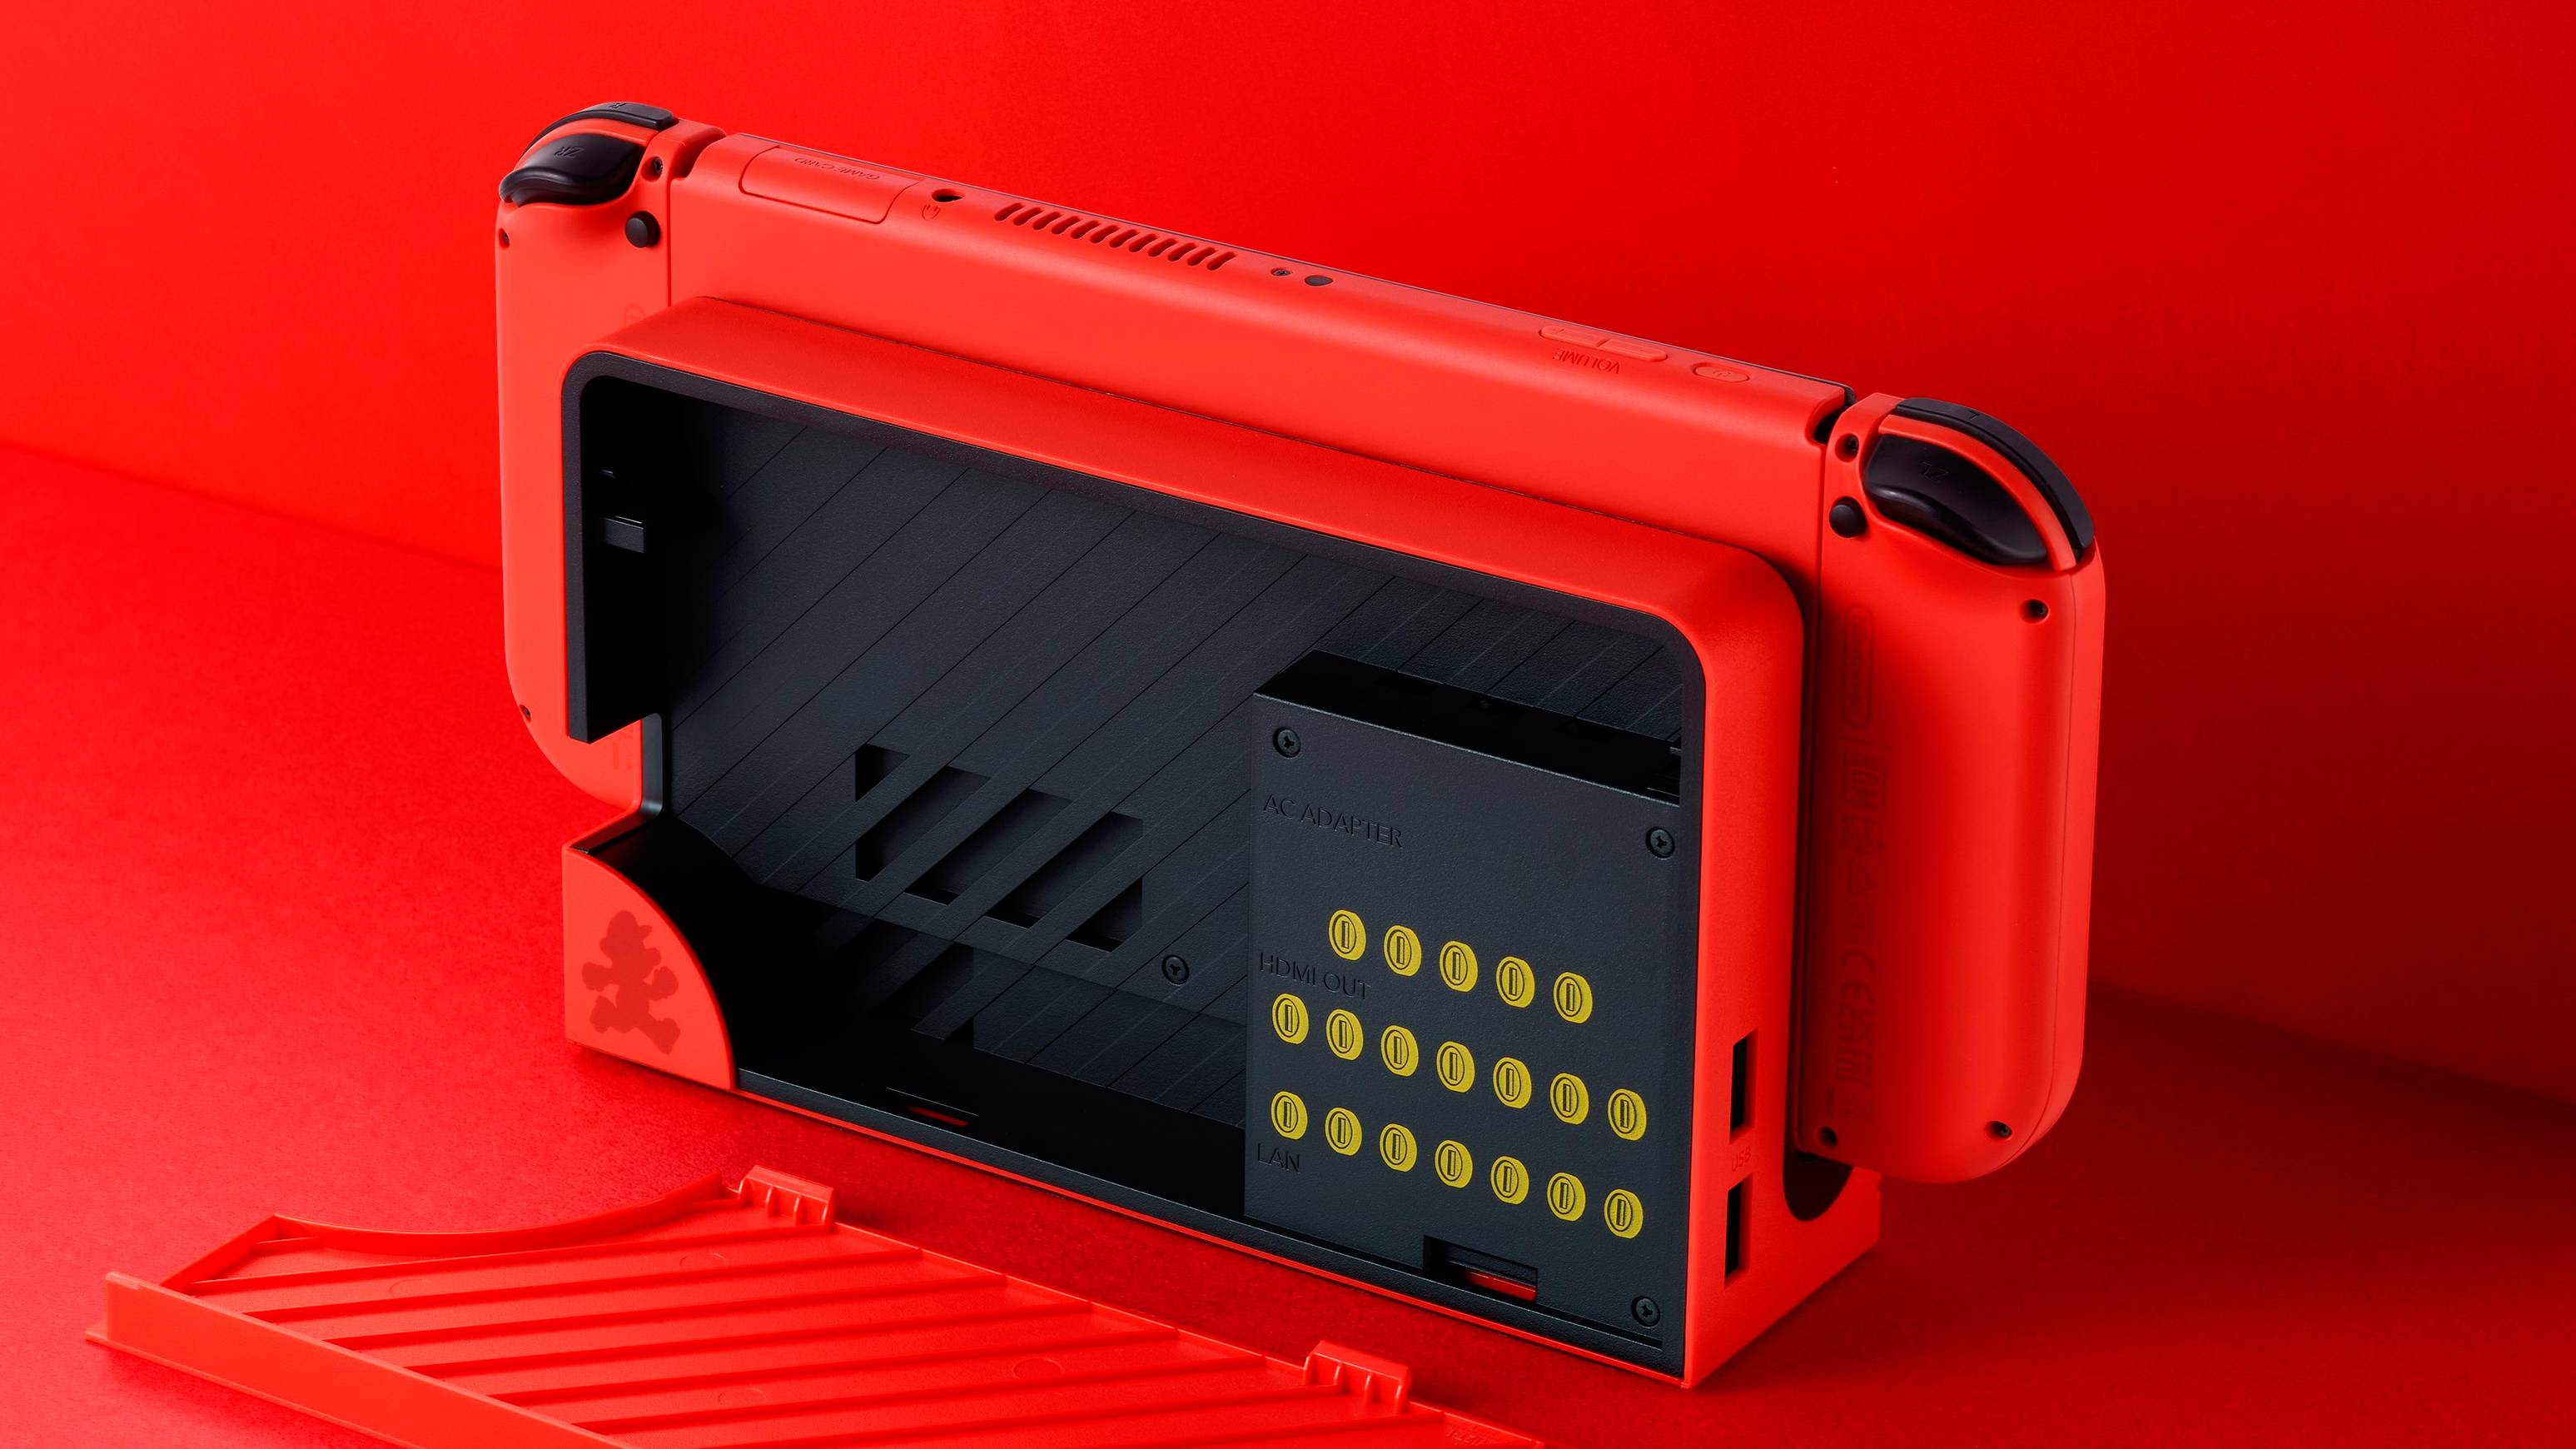  Nintendo Switch - OLED Model: Mario Red Edition (Renewed)